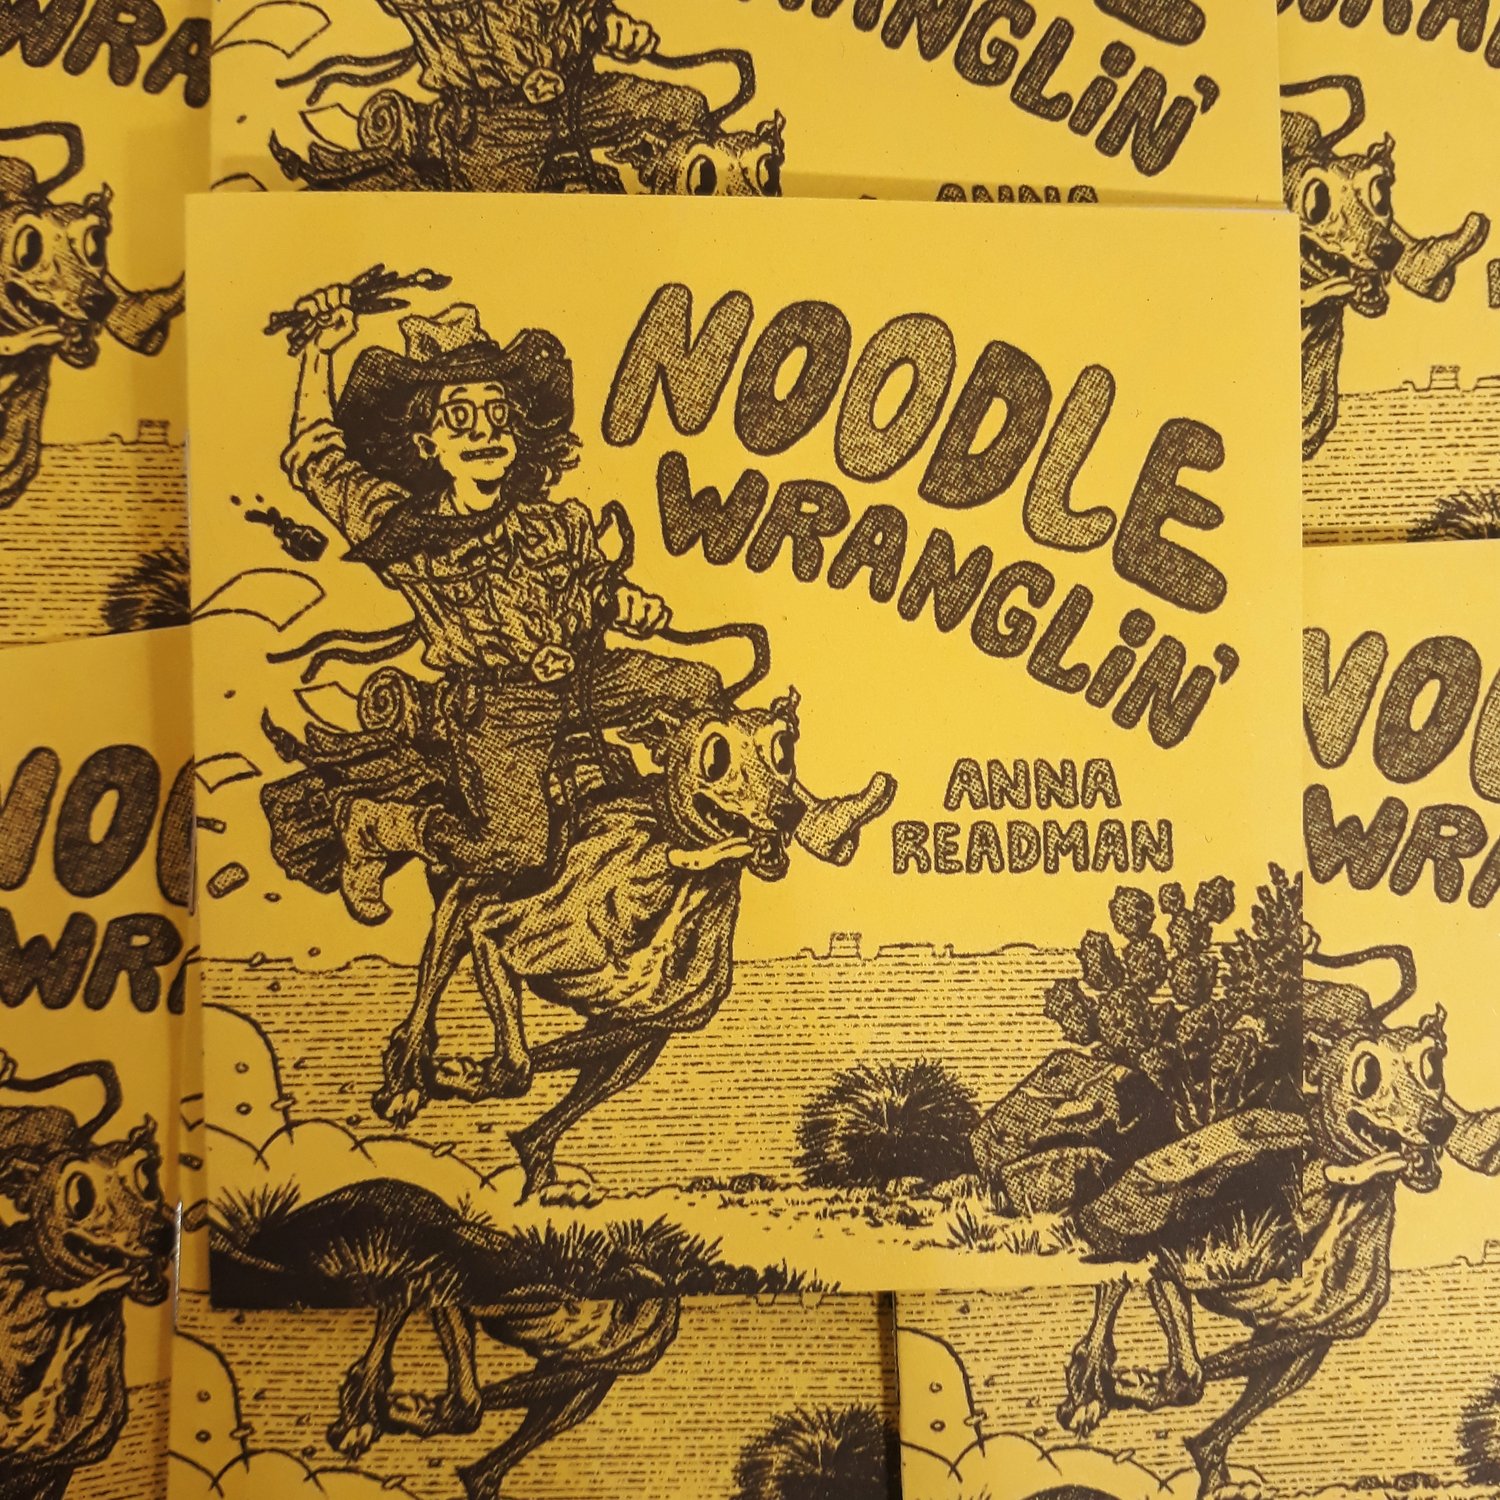 Noodle Wranglin'